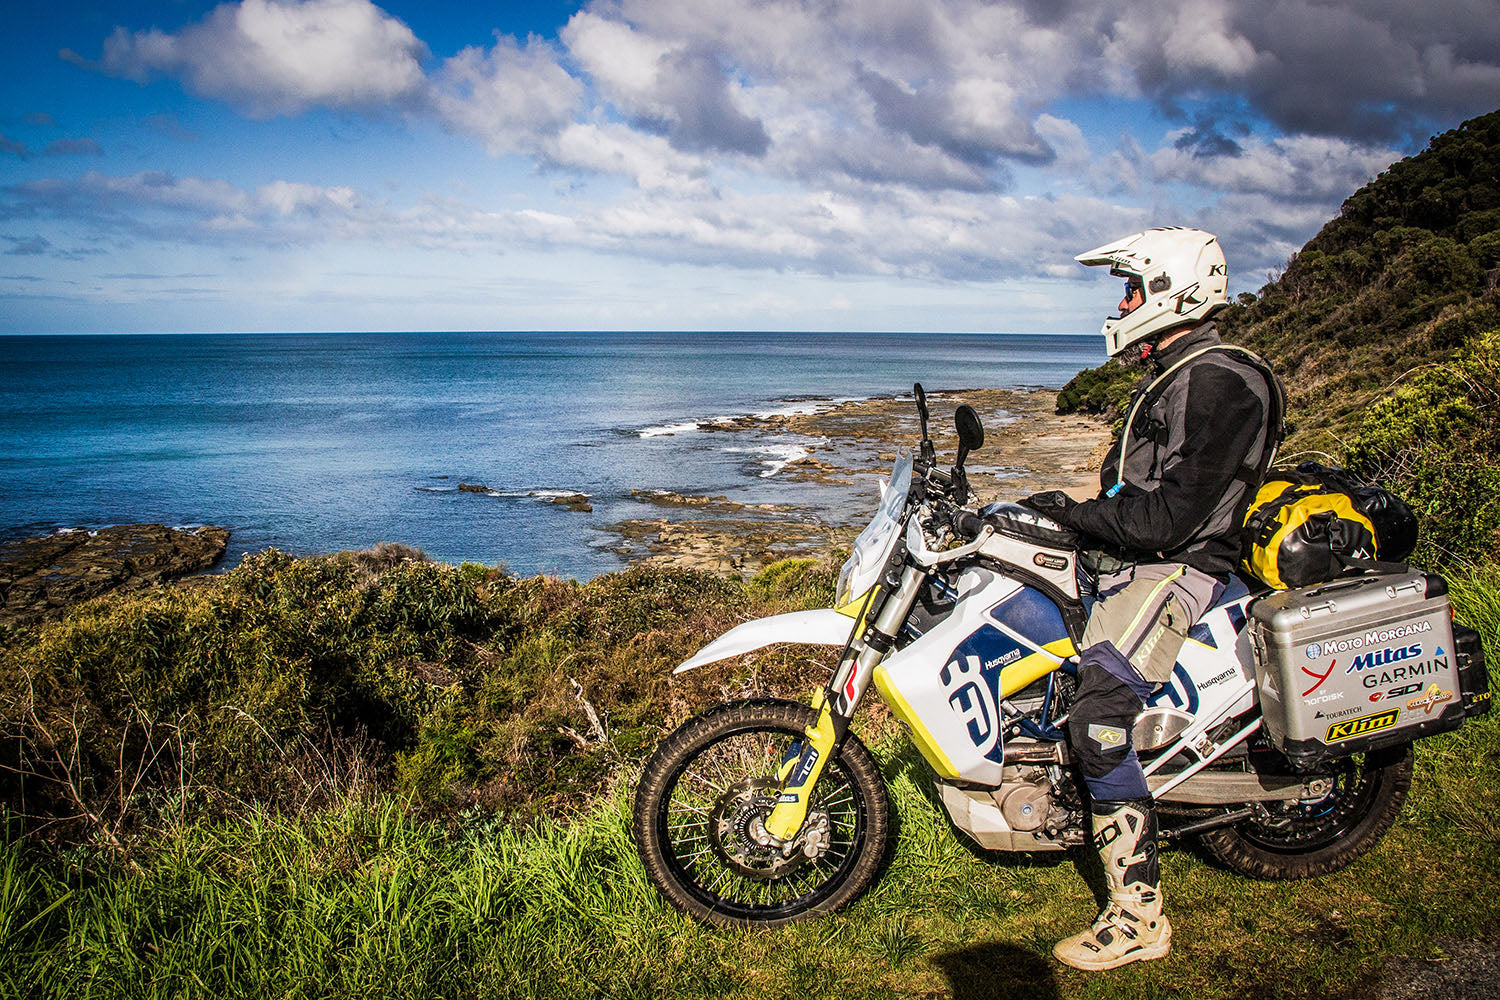 Adventure motorcycle riding on the South Australia coast